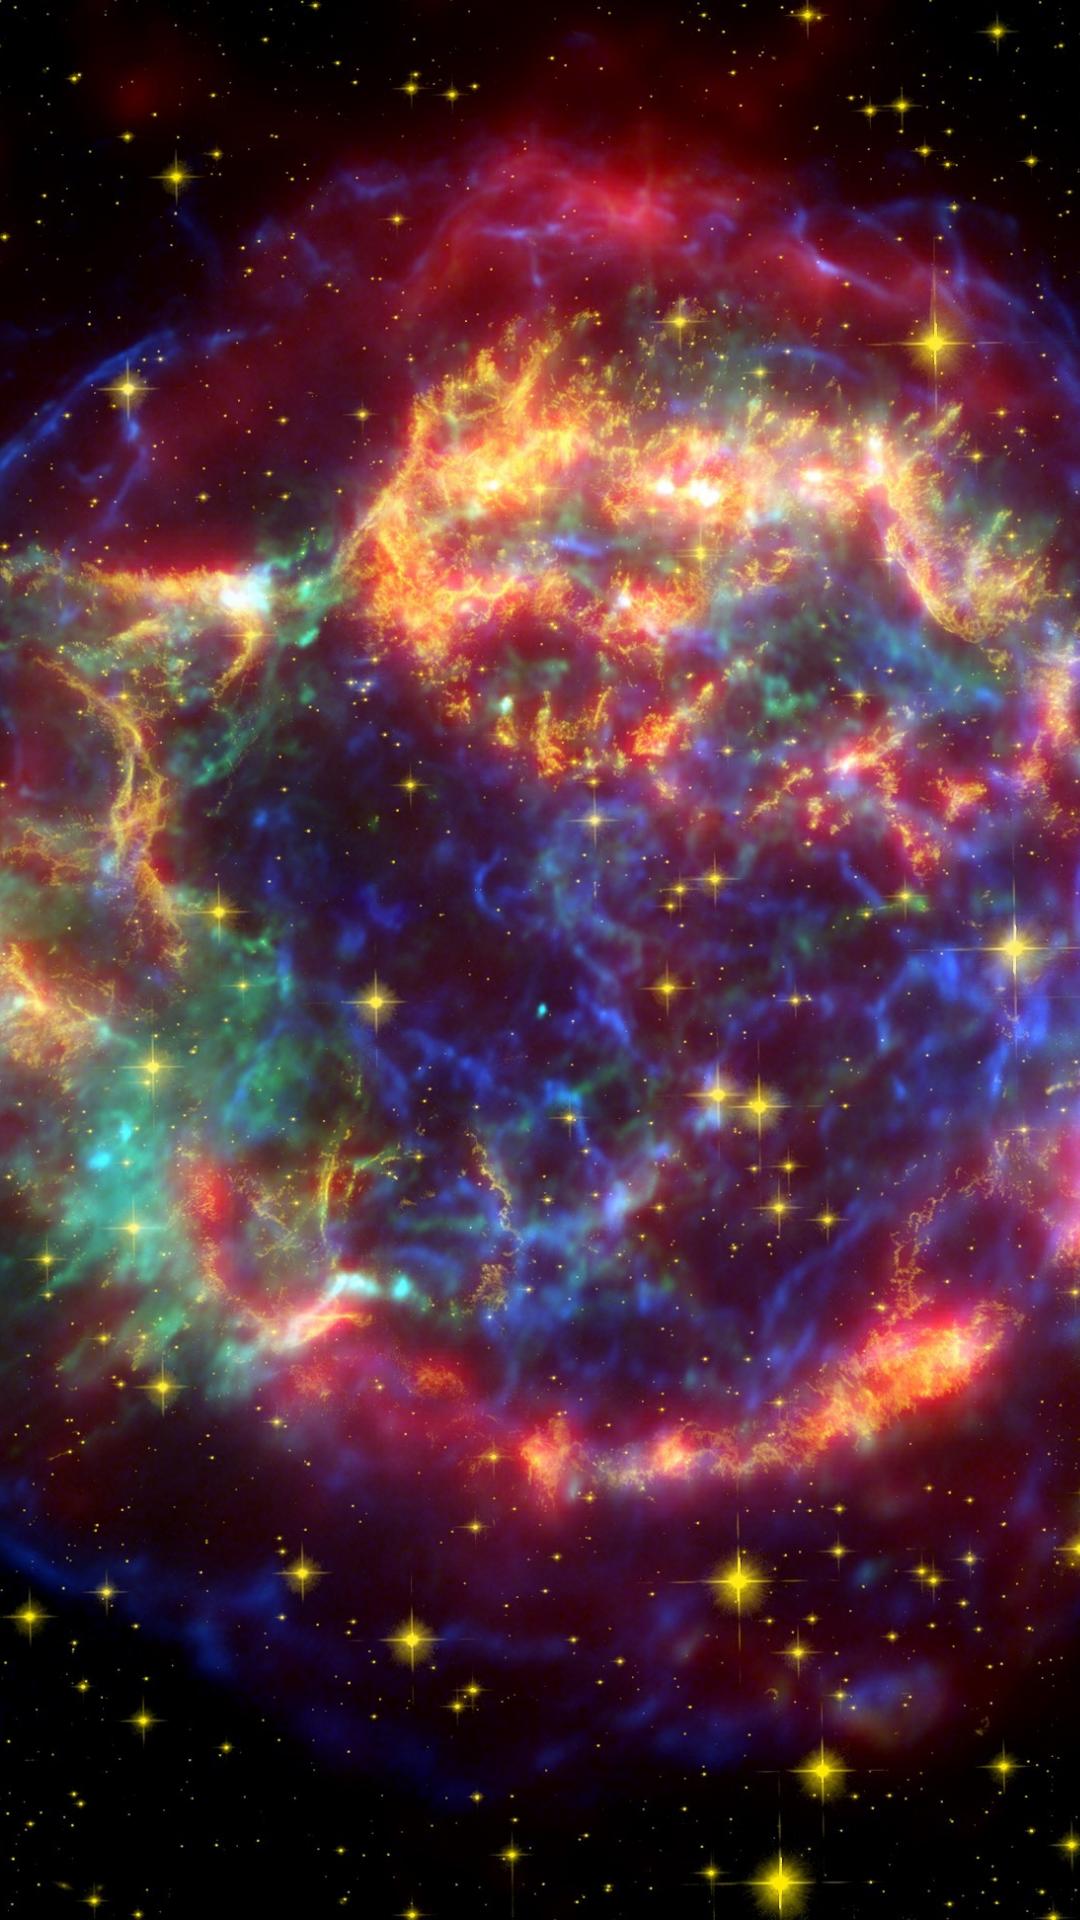 supernova tapete,natur,galaxis,nebel,weltraum,astronomisches objekt